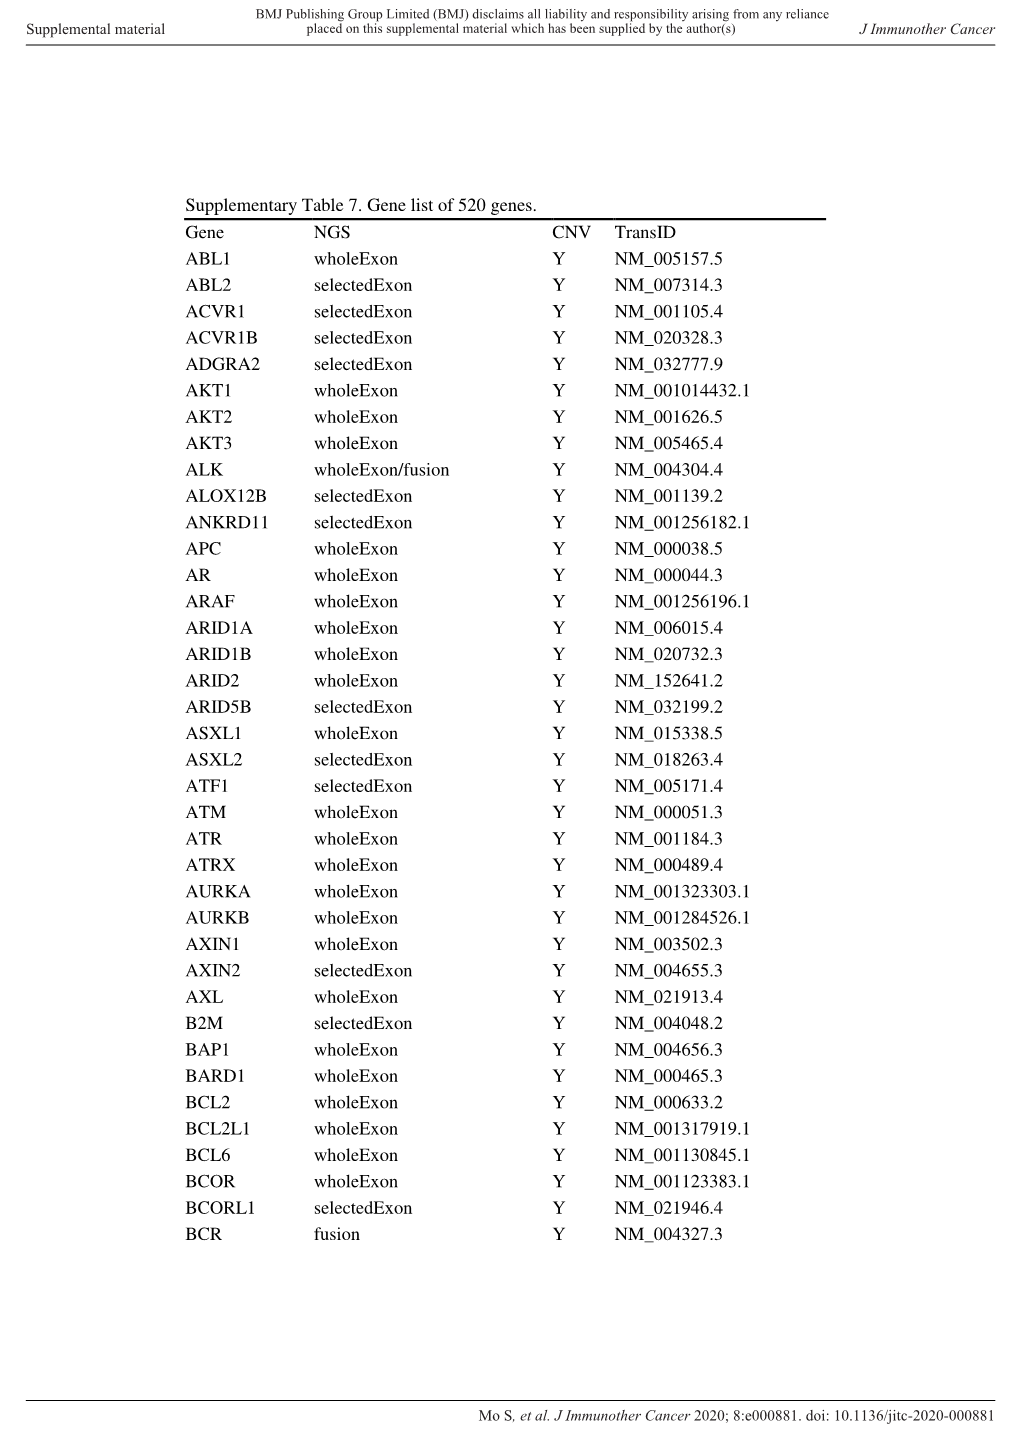 Supplementary Table 7. Gene List of 520 Genes. Gene NGS CNV